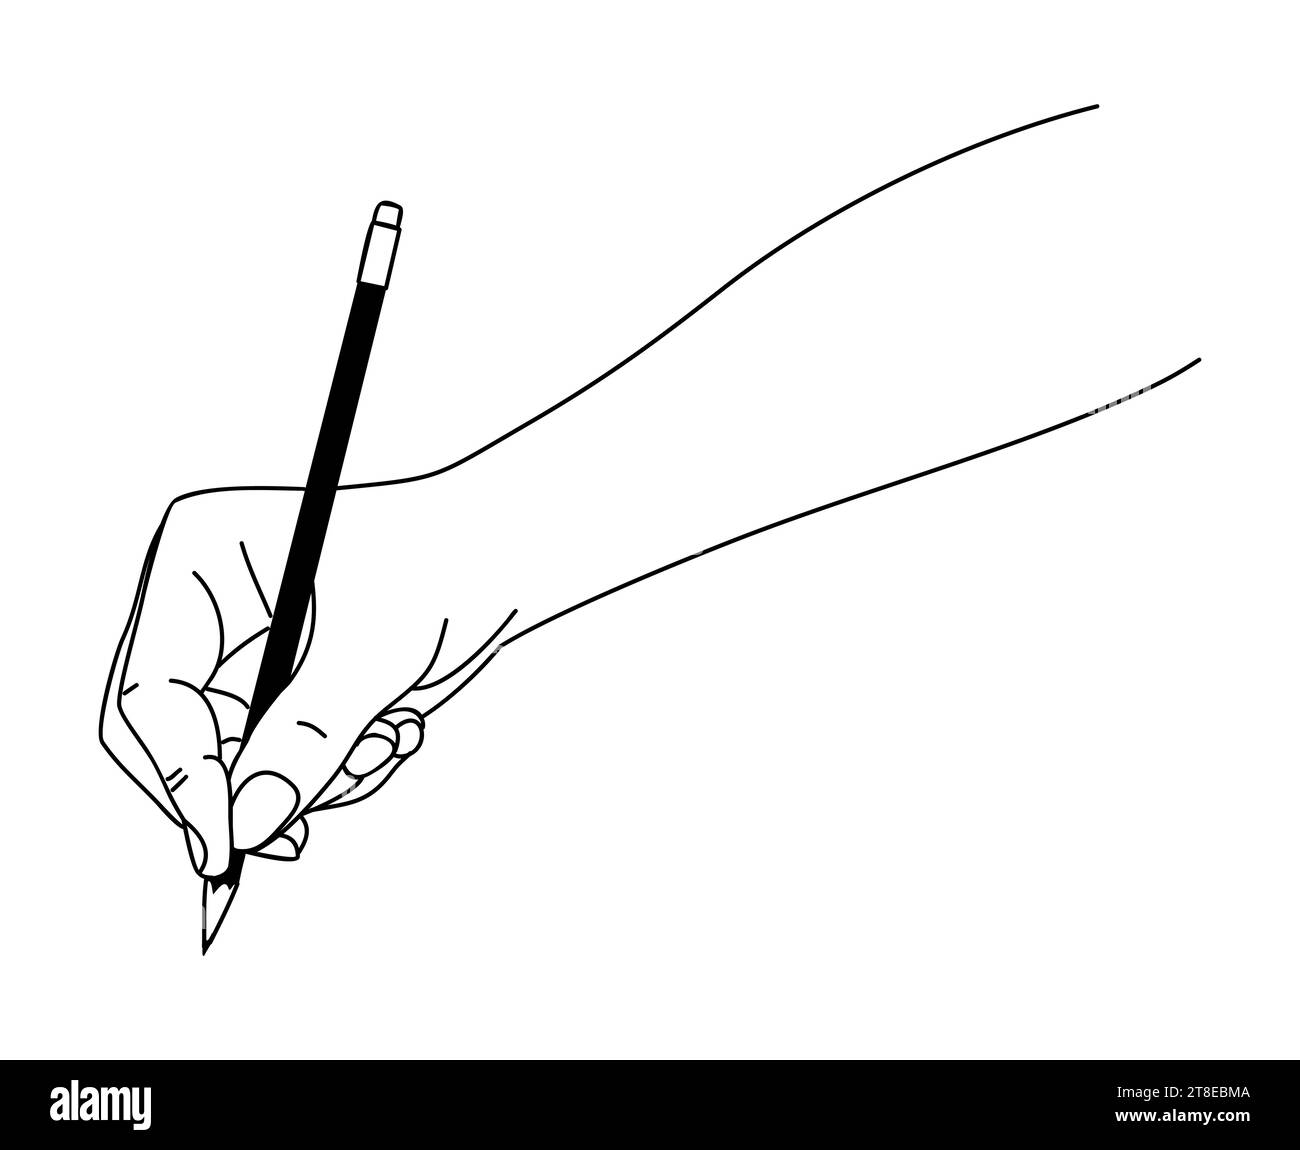 https://c8.alamy.com/comp/2T8EBMA/hand-holding-pencil-vector-line-art-drawing-2T8EBMA.jpg